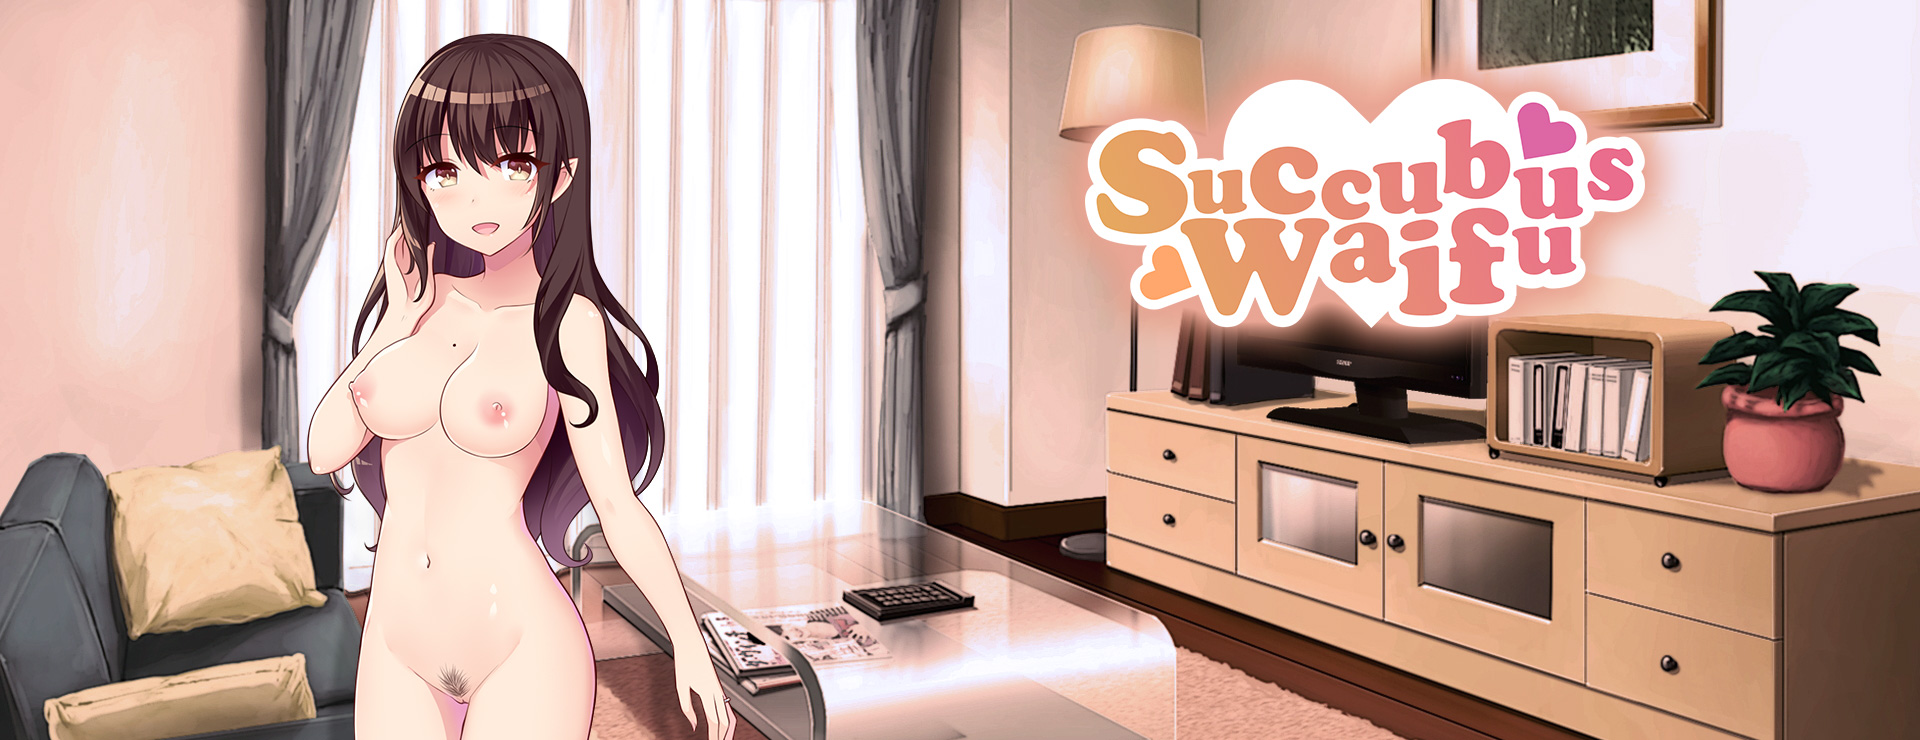 Succubus Waifu - Visual Novel Game